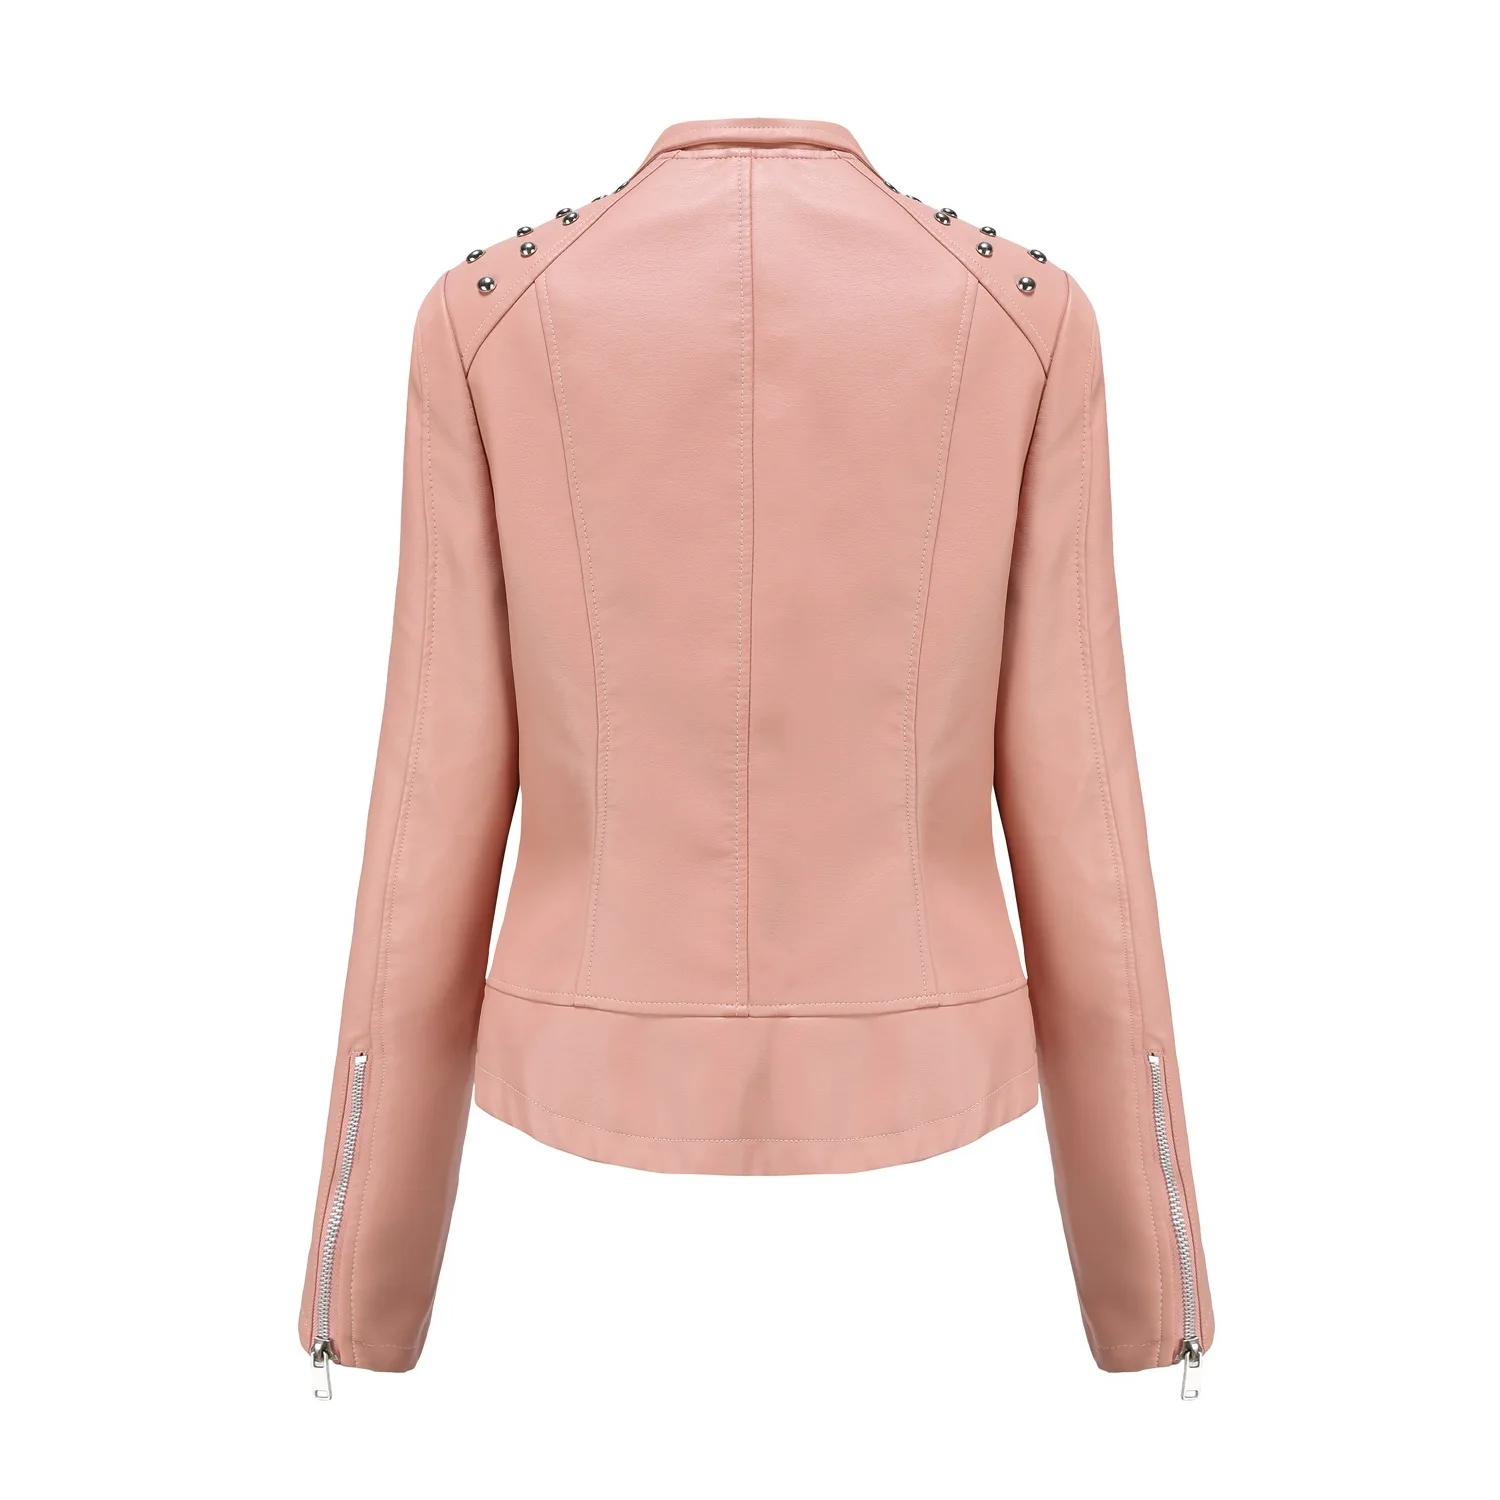 Female Clothing Jackets Women's PU Leather Rivet Coats Zipper 2022 New Ladies Fashion Spring Autumn Motor Biker Tops With Pocket enlarge